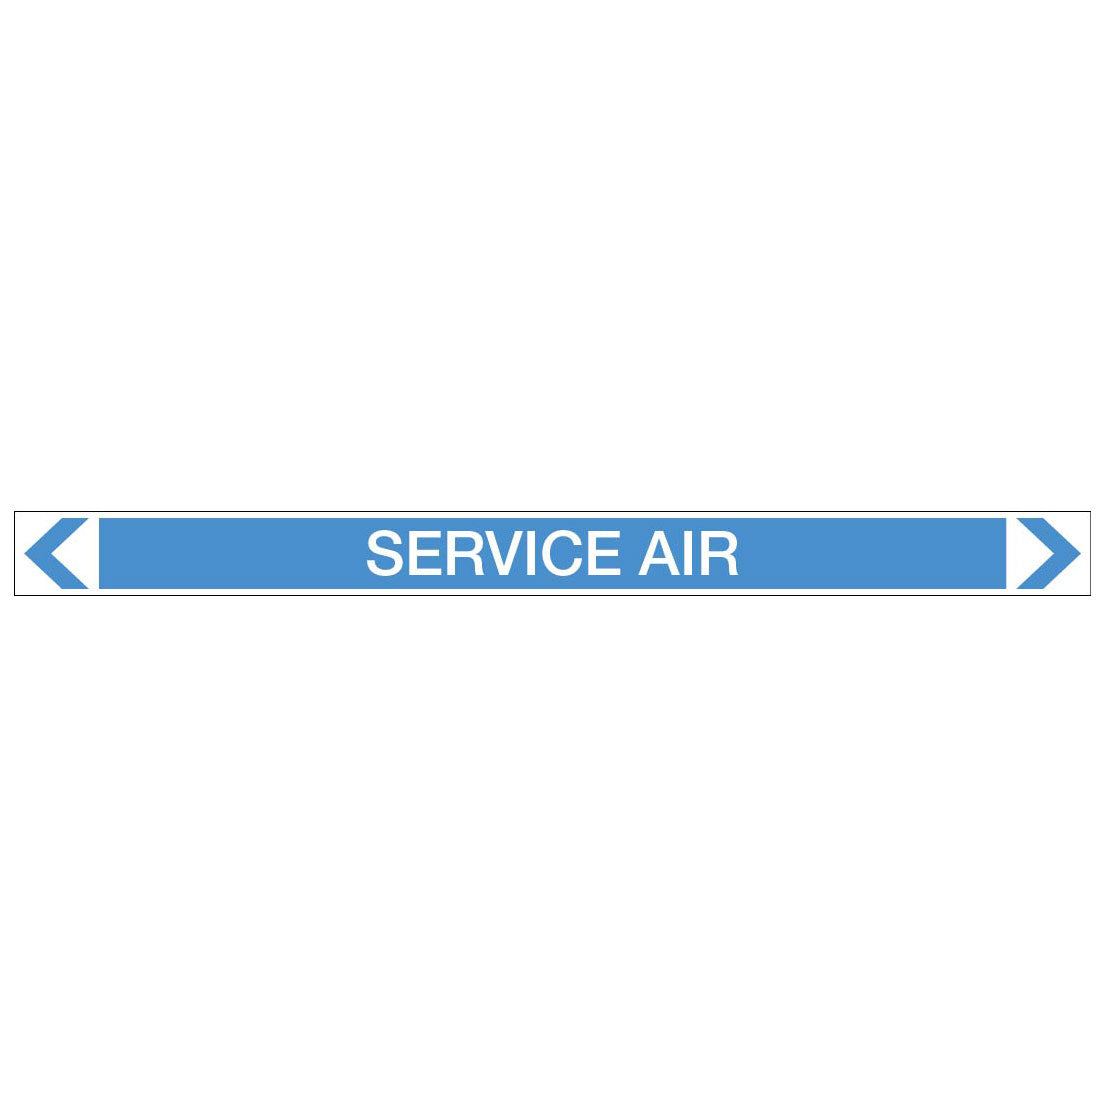 Air - Service Air - Pipe Marker Sticker